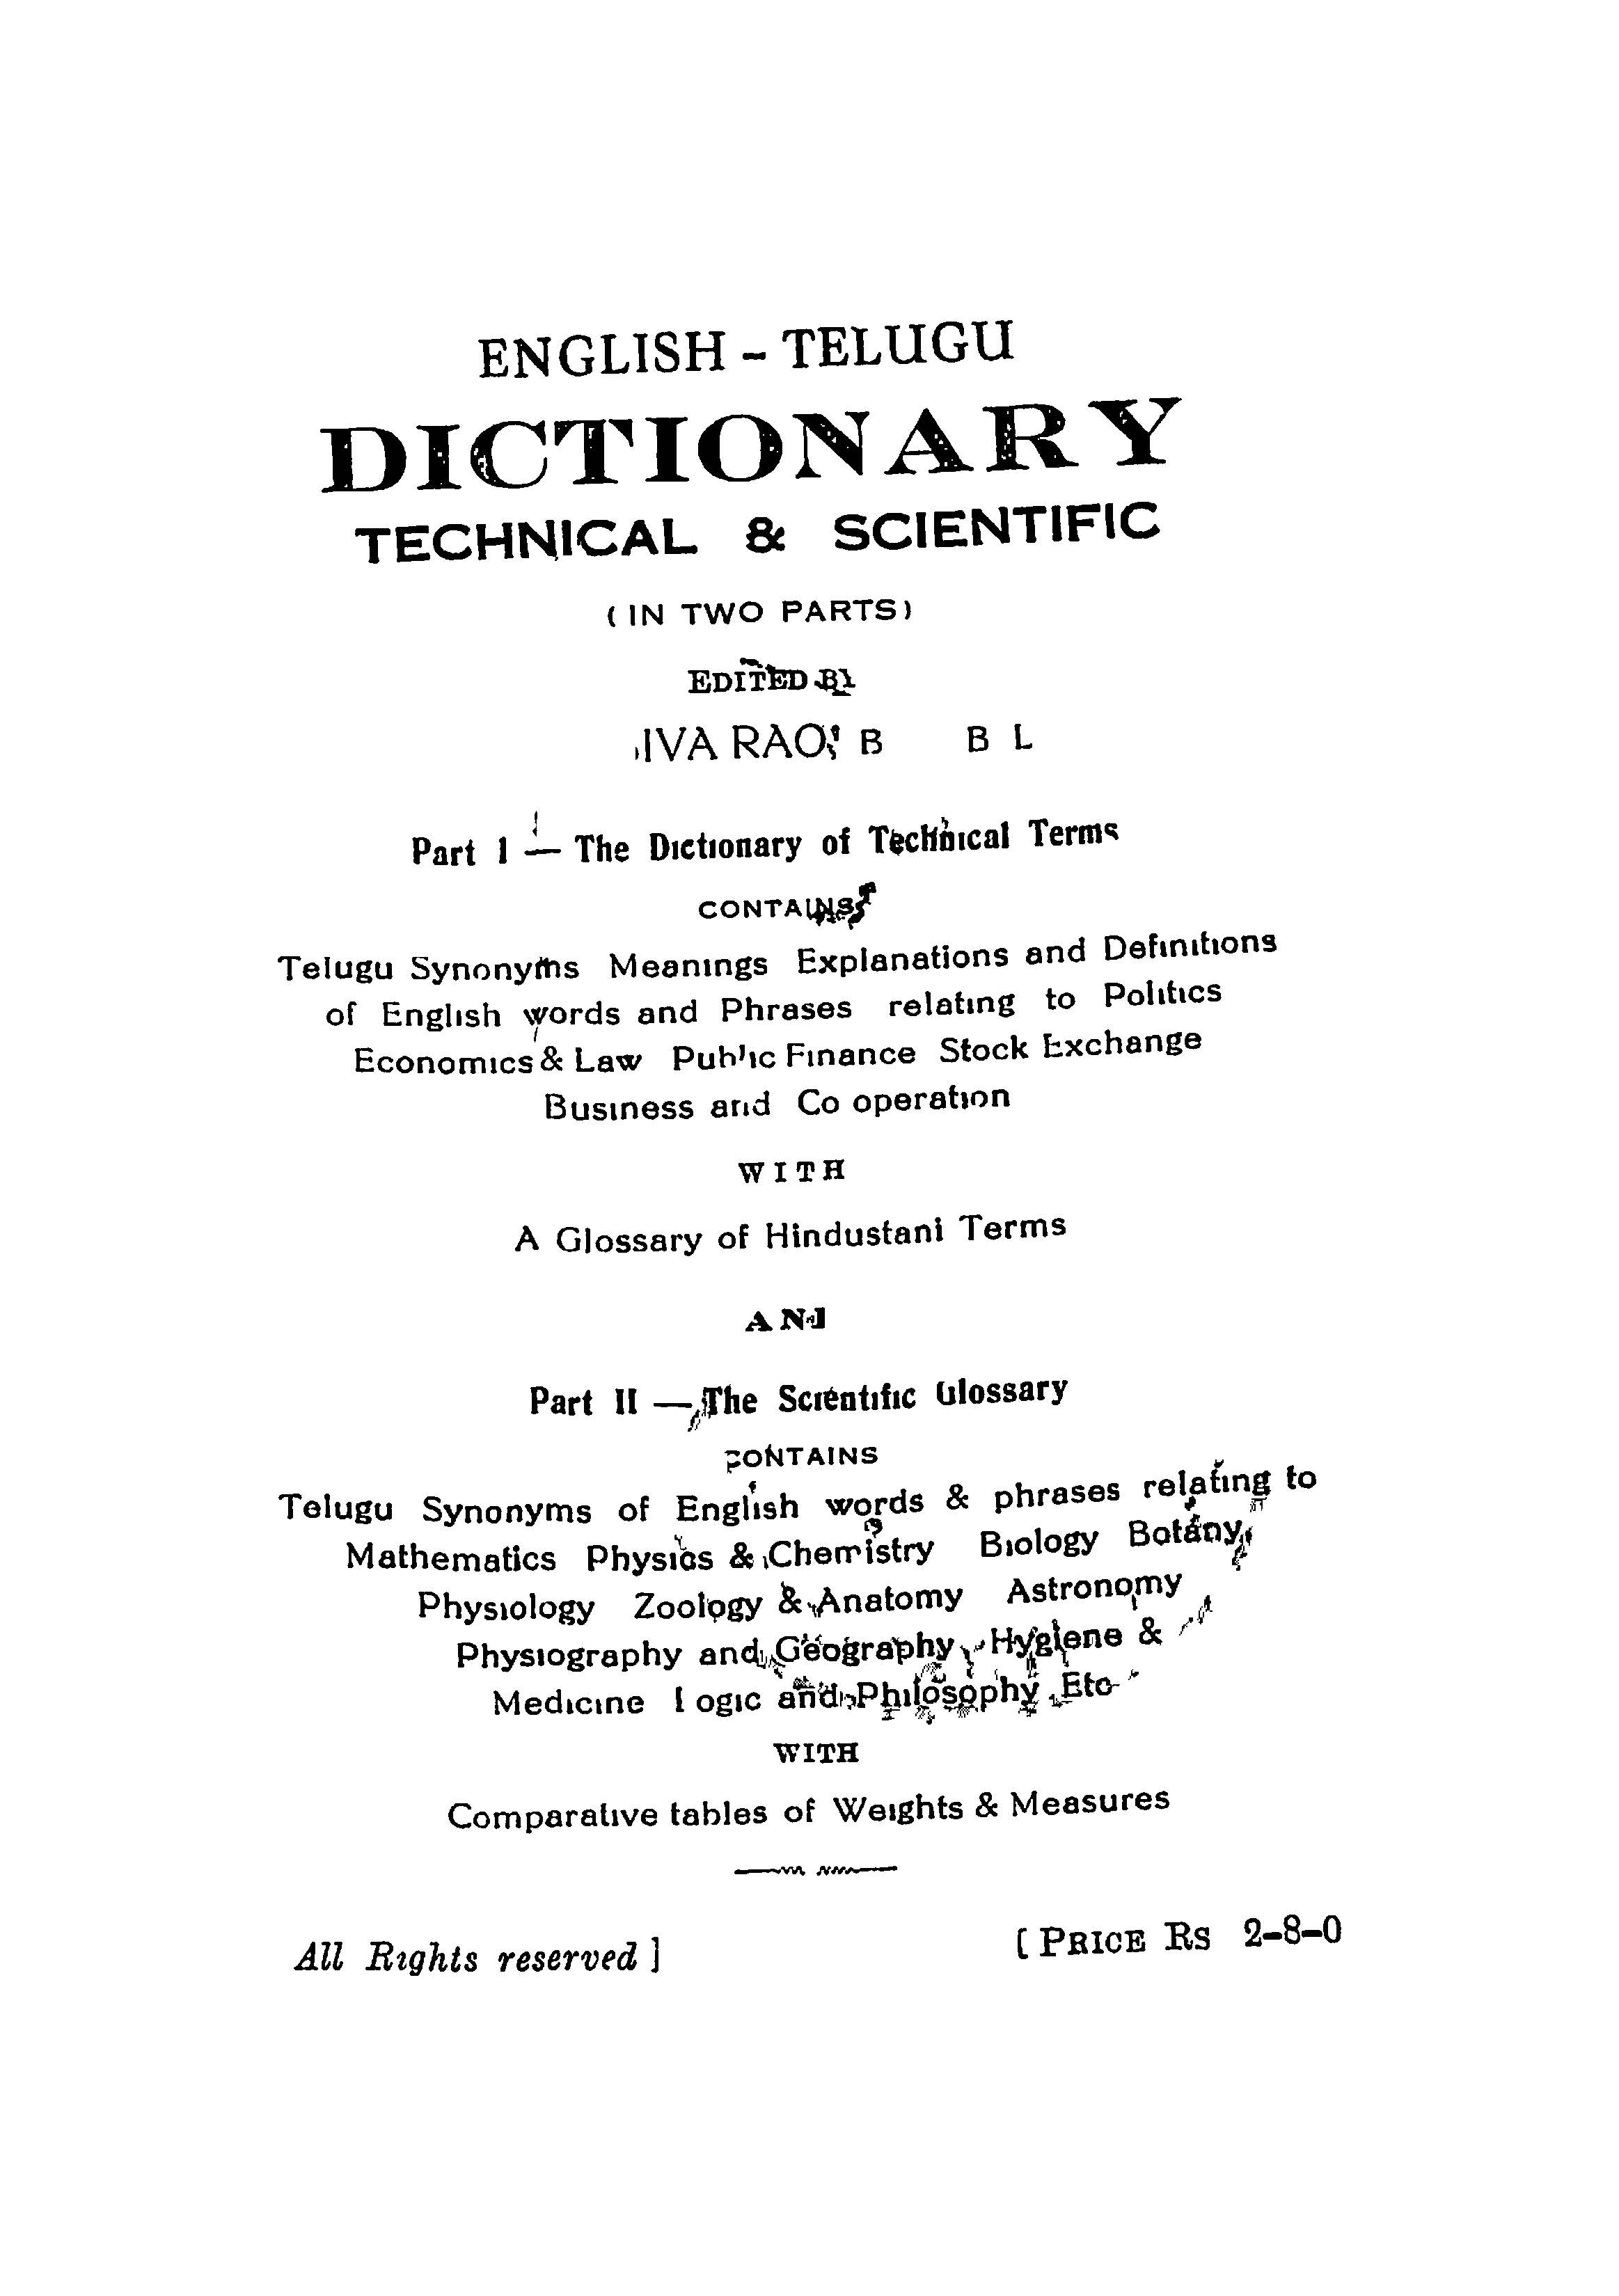 English-Telugu Dictionary Technical & Scientific